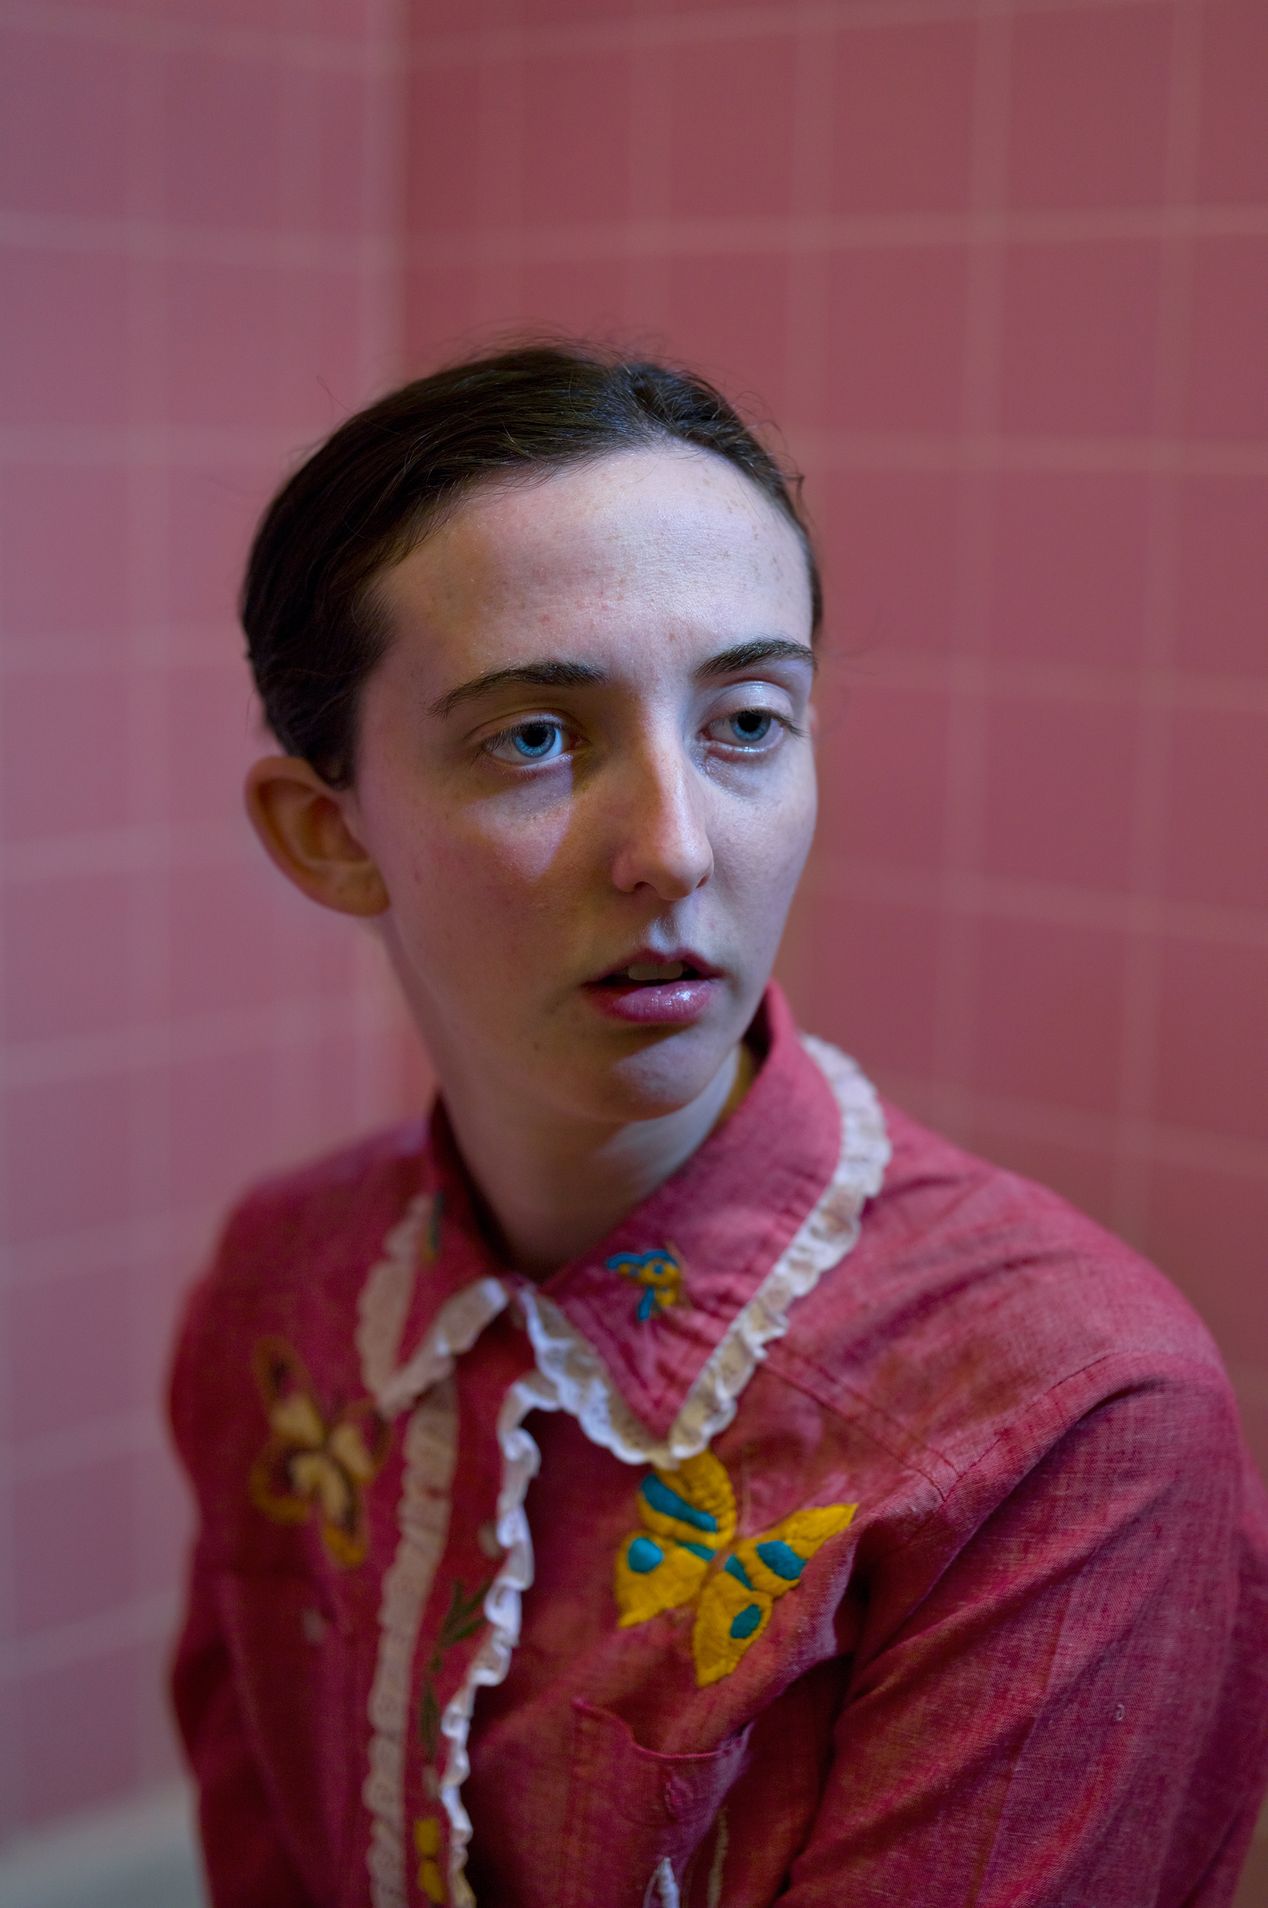 Closeup portrait of a woman in a pink bathroom, editorial photography, Ilona Szwarc, Los Angeles portrait photographer.